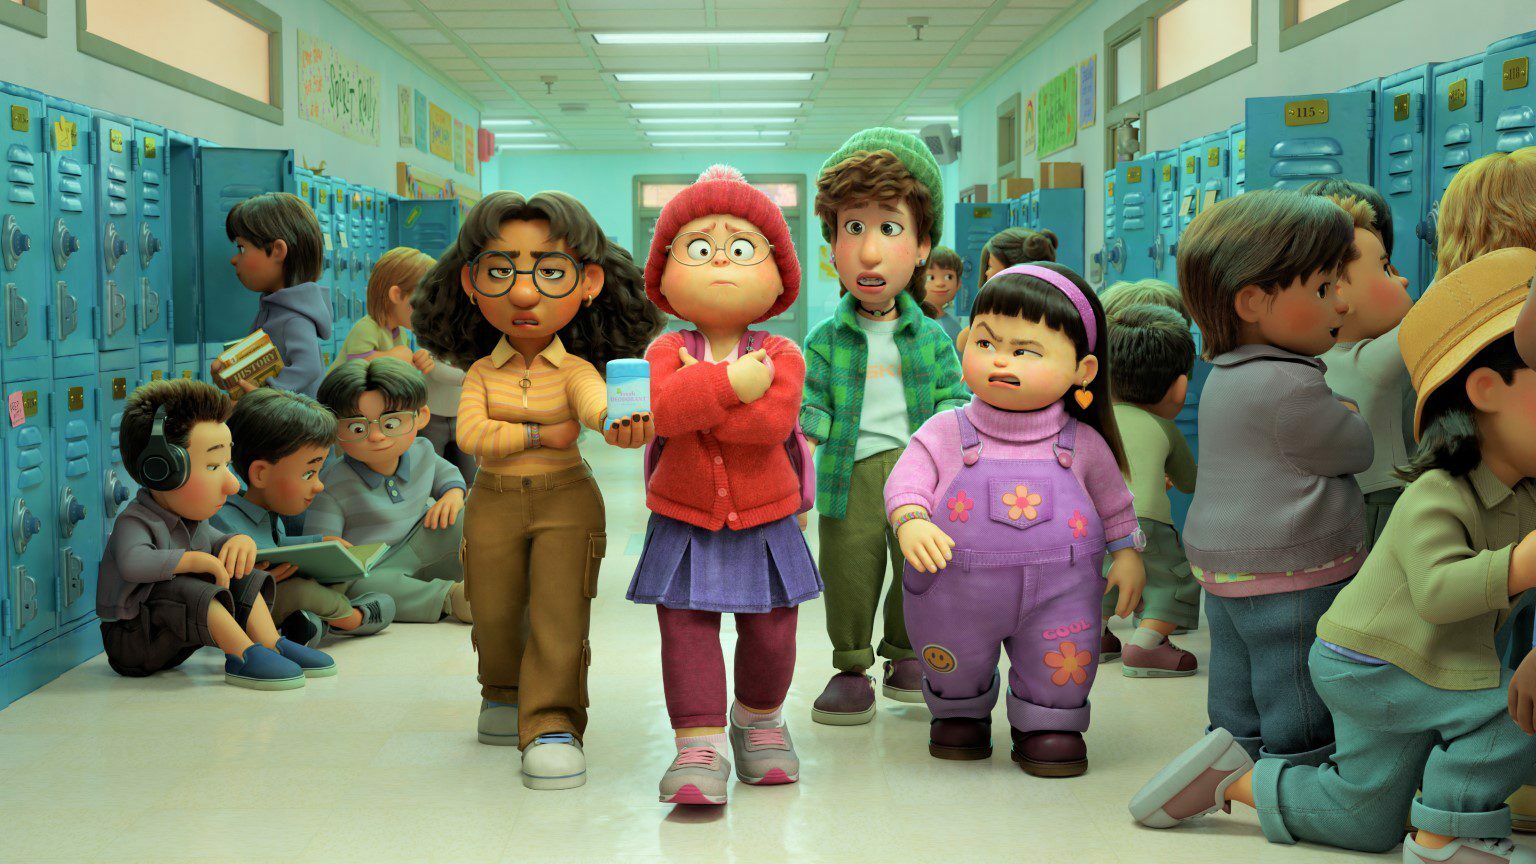 Filmkritik zu dem Pixar-Animationsfilm ROT